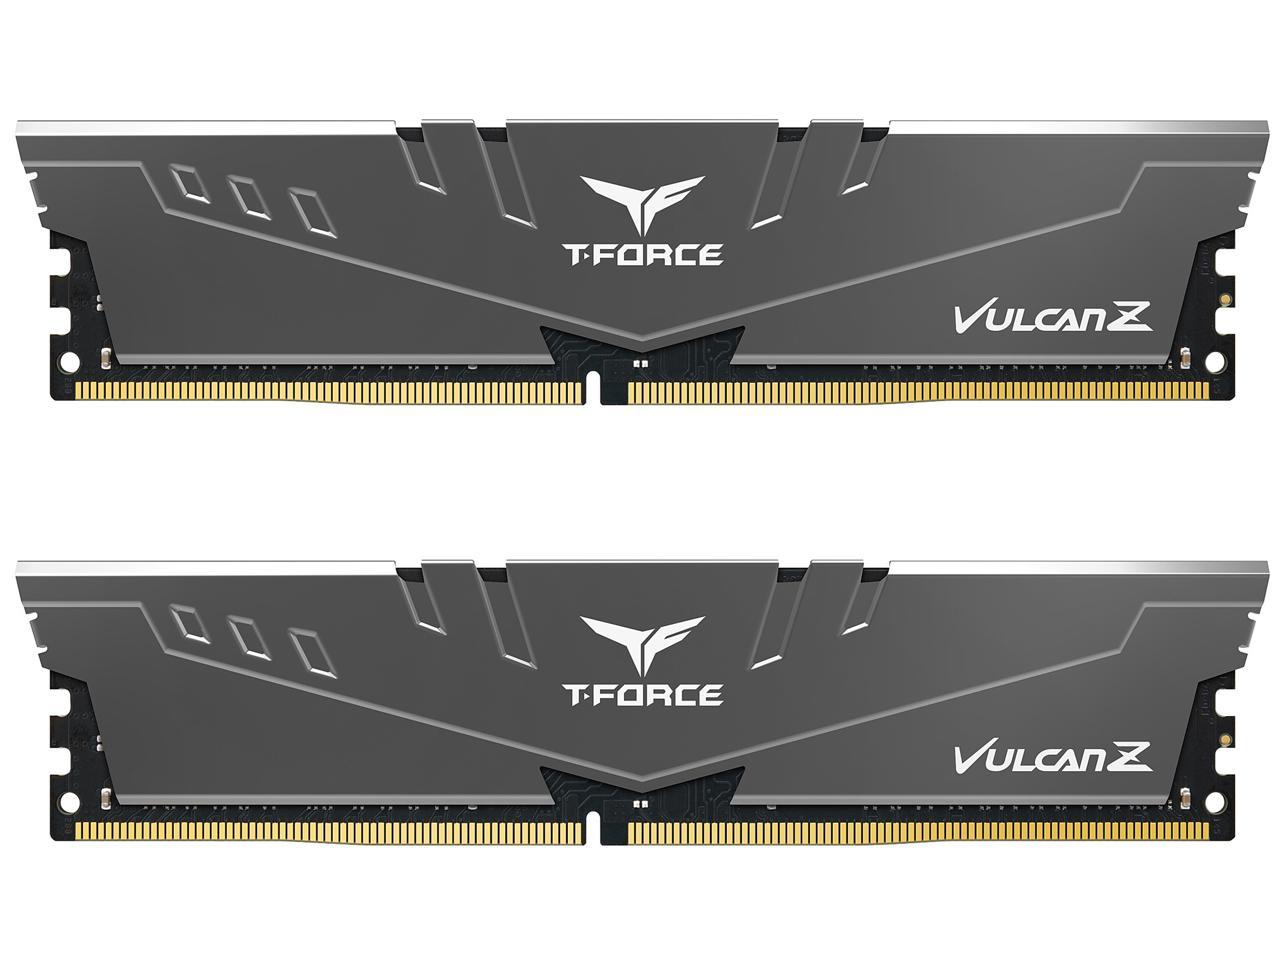 32GB (2x 16) Team T-FORCE VULCAN Z DDR4 3200 Desktop RAM kit $85